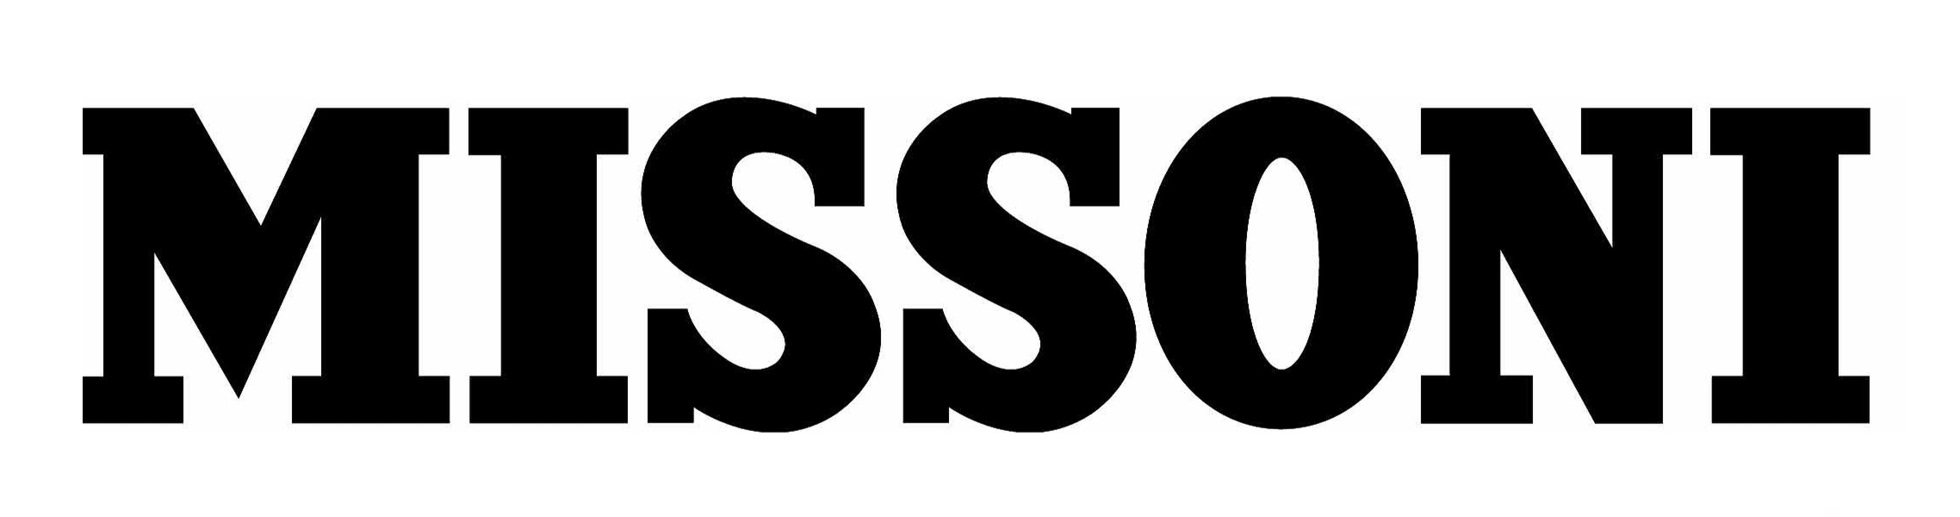 missoni-logo